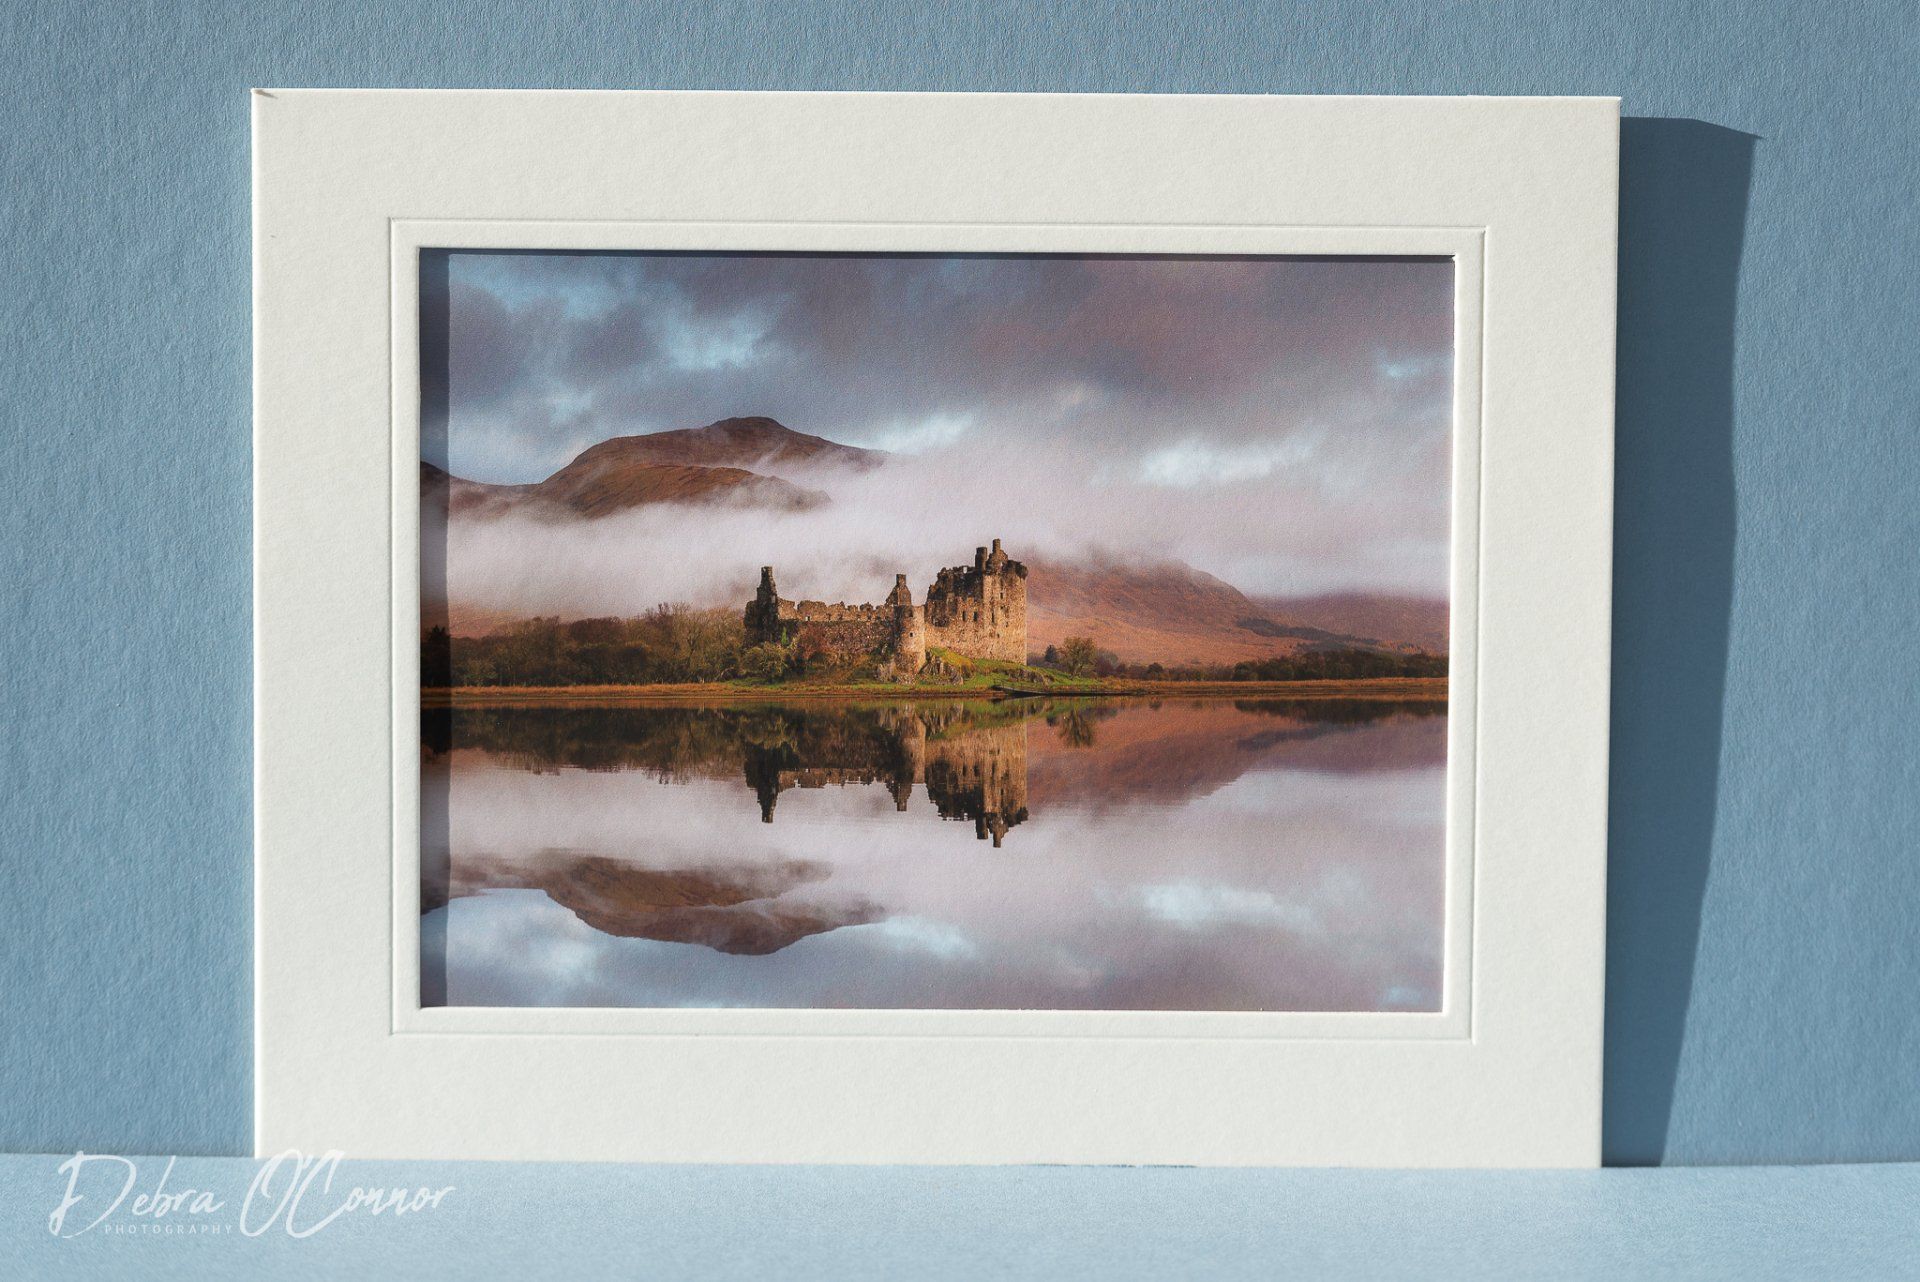 Beautiful landscape photo for sale | Lilchurn Castle | Scottish Landscape